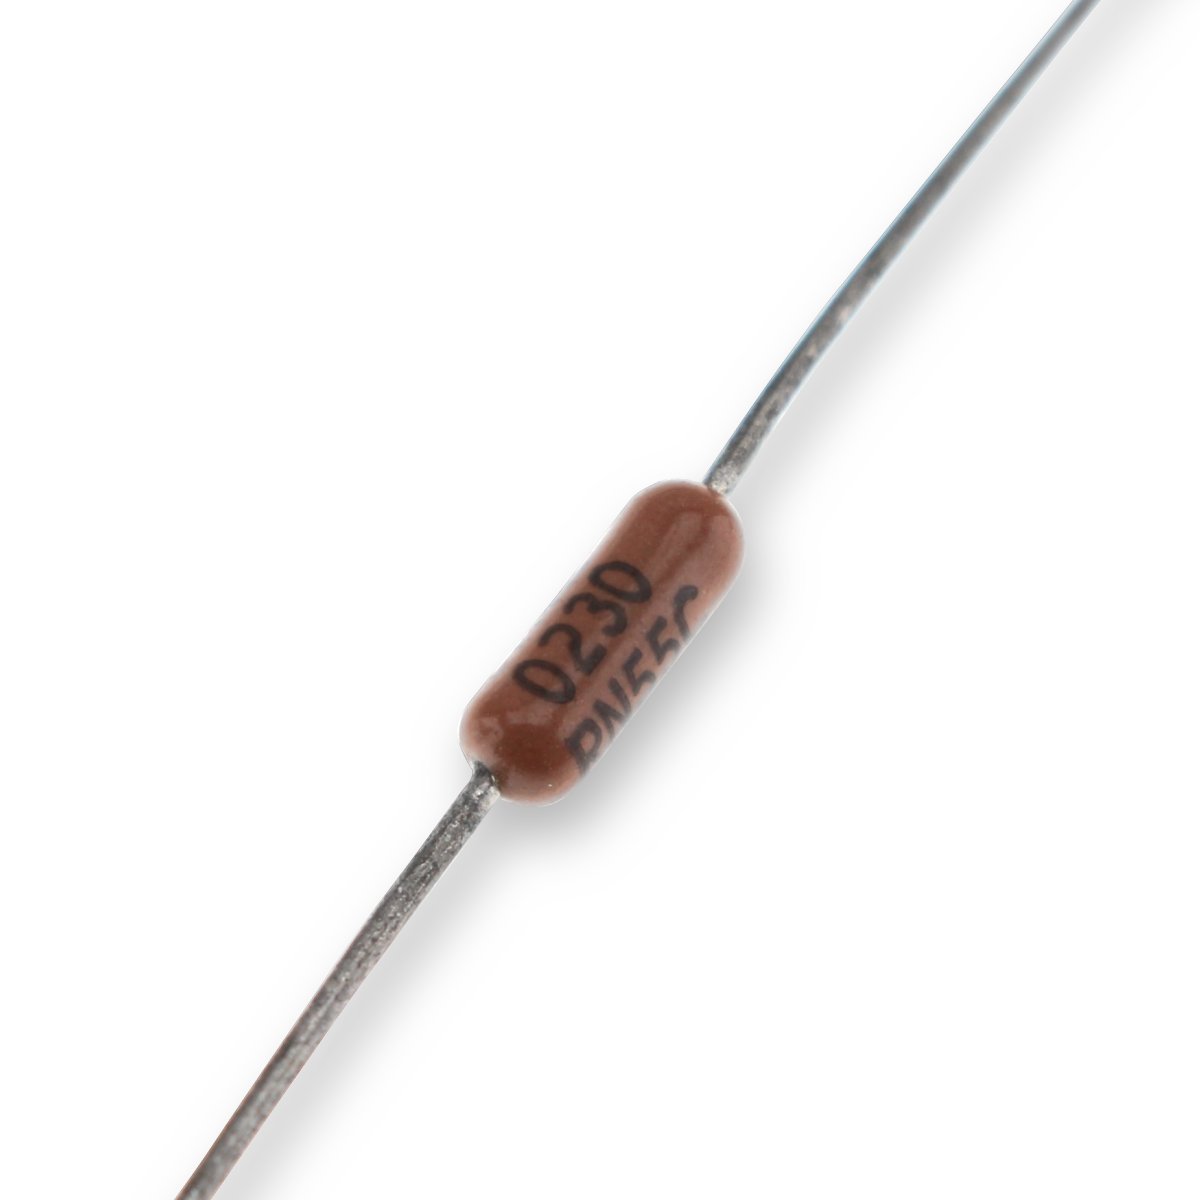 VISHAY DALE CMF55 Resistor 1% 50ppm 221 Ohm